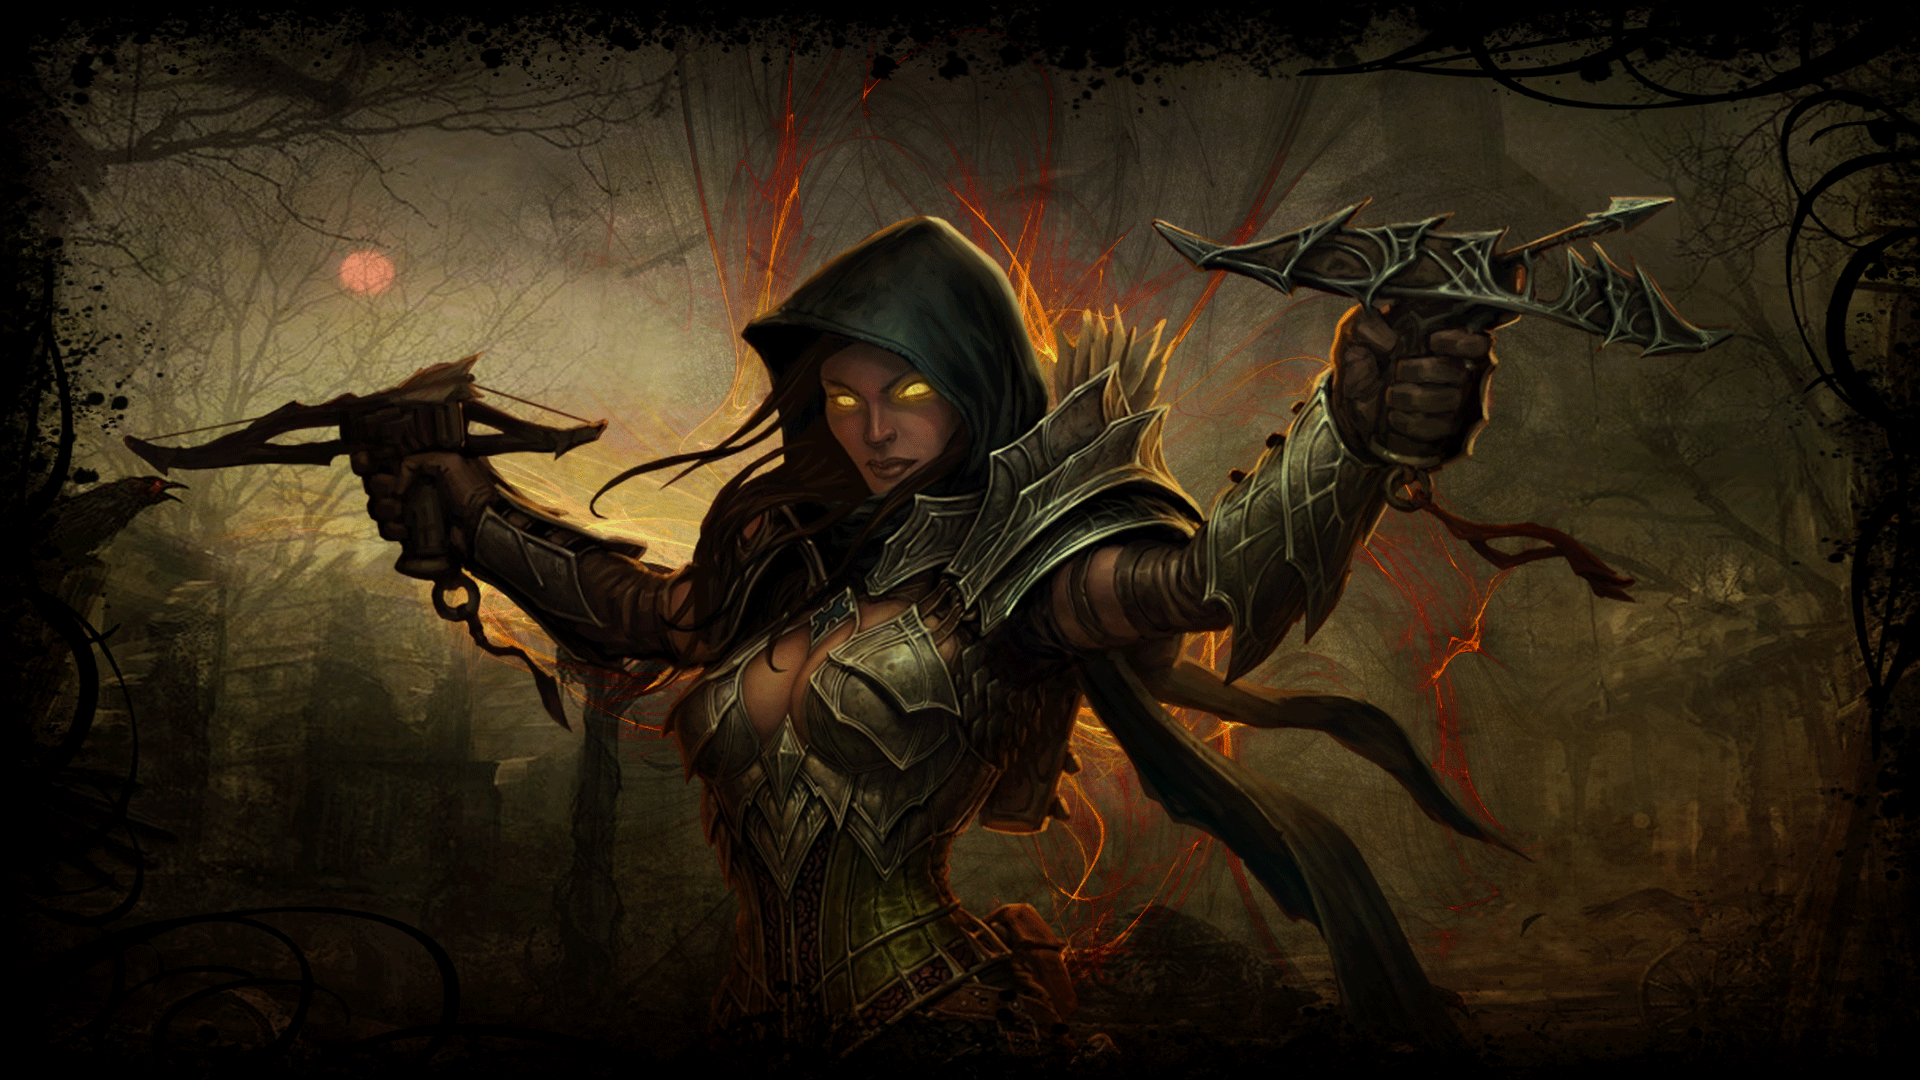 Diablo 3 Demon Hunter background by cursedblade1337 on